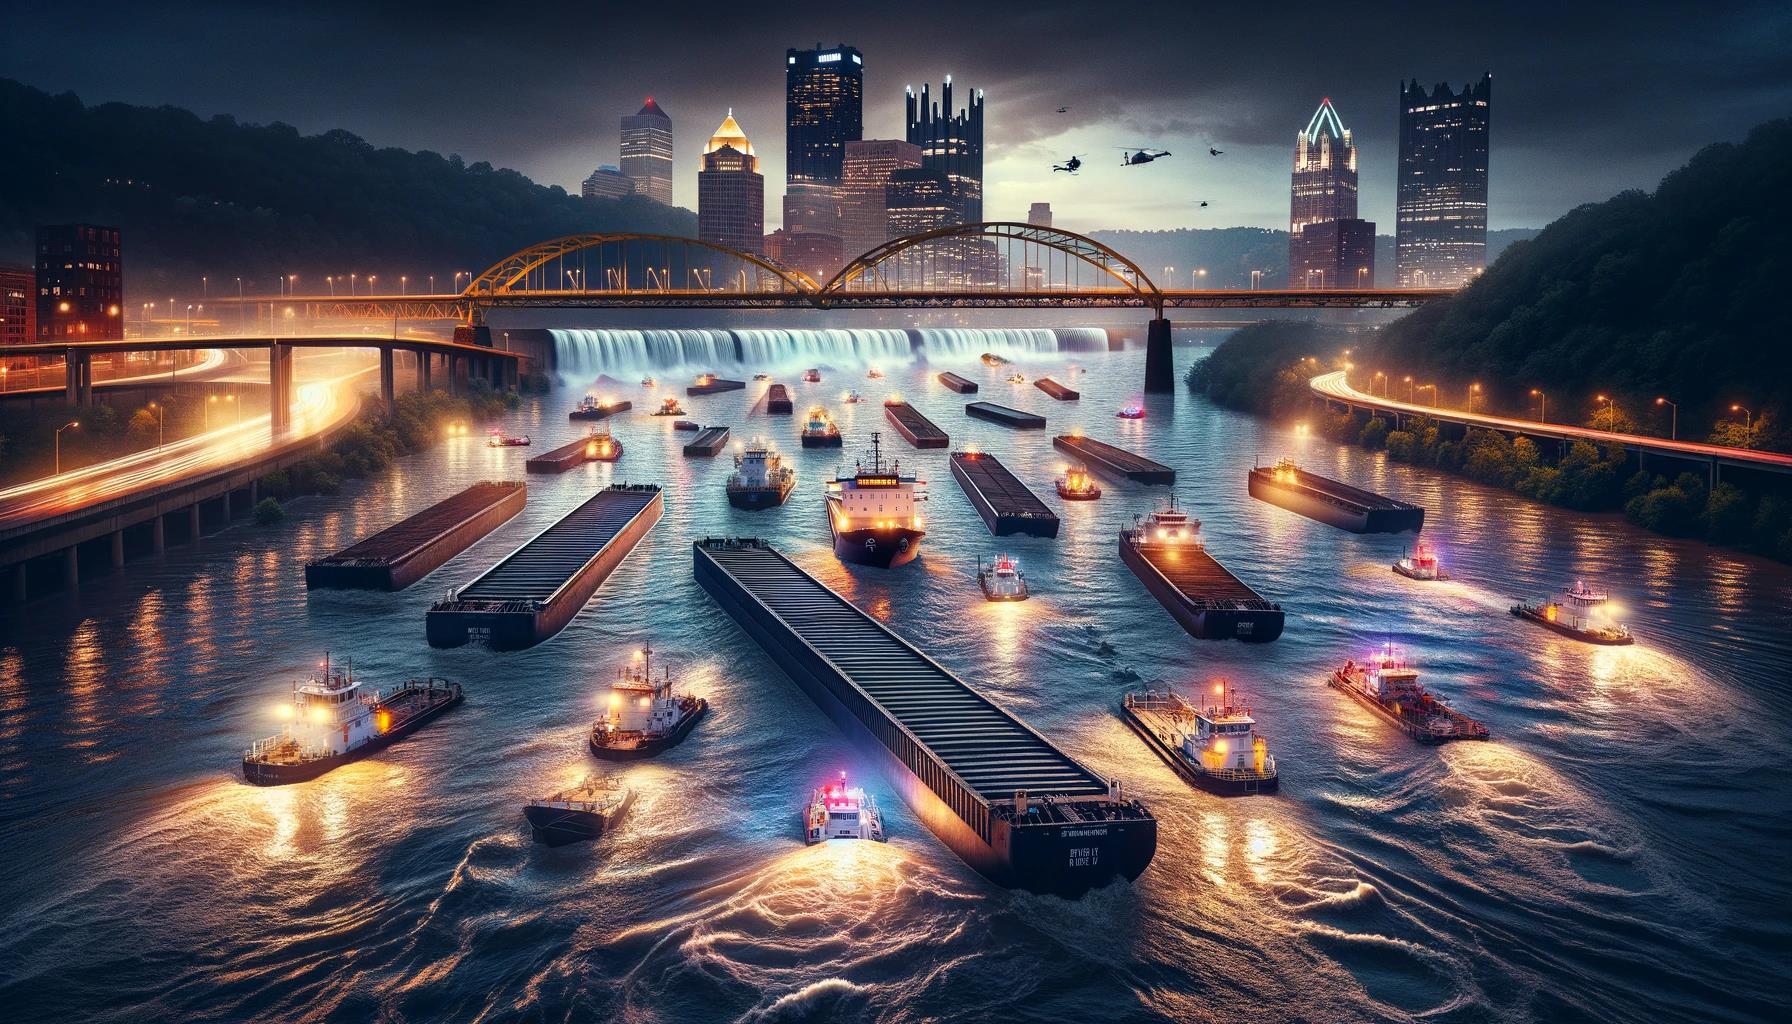 Breaking News: 26 Barges (!) Set Adrift on the Ohio River, Prompting Emergency Bridge Closures and Dam Damage